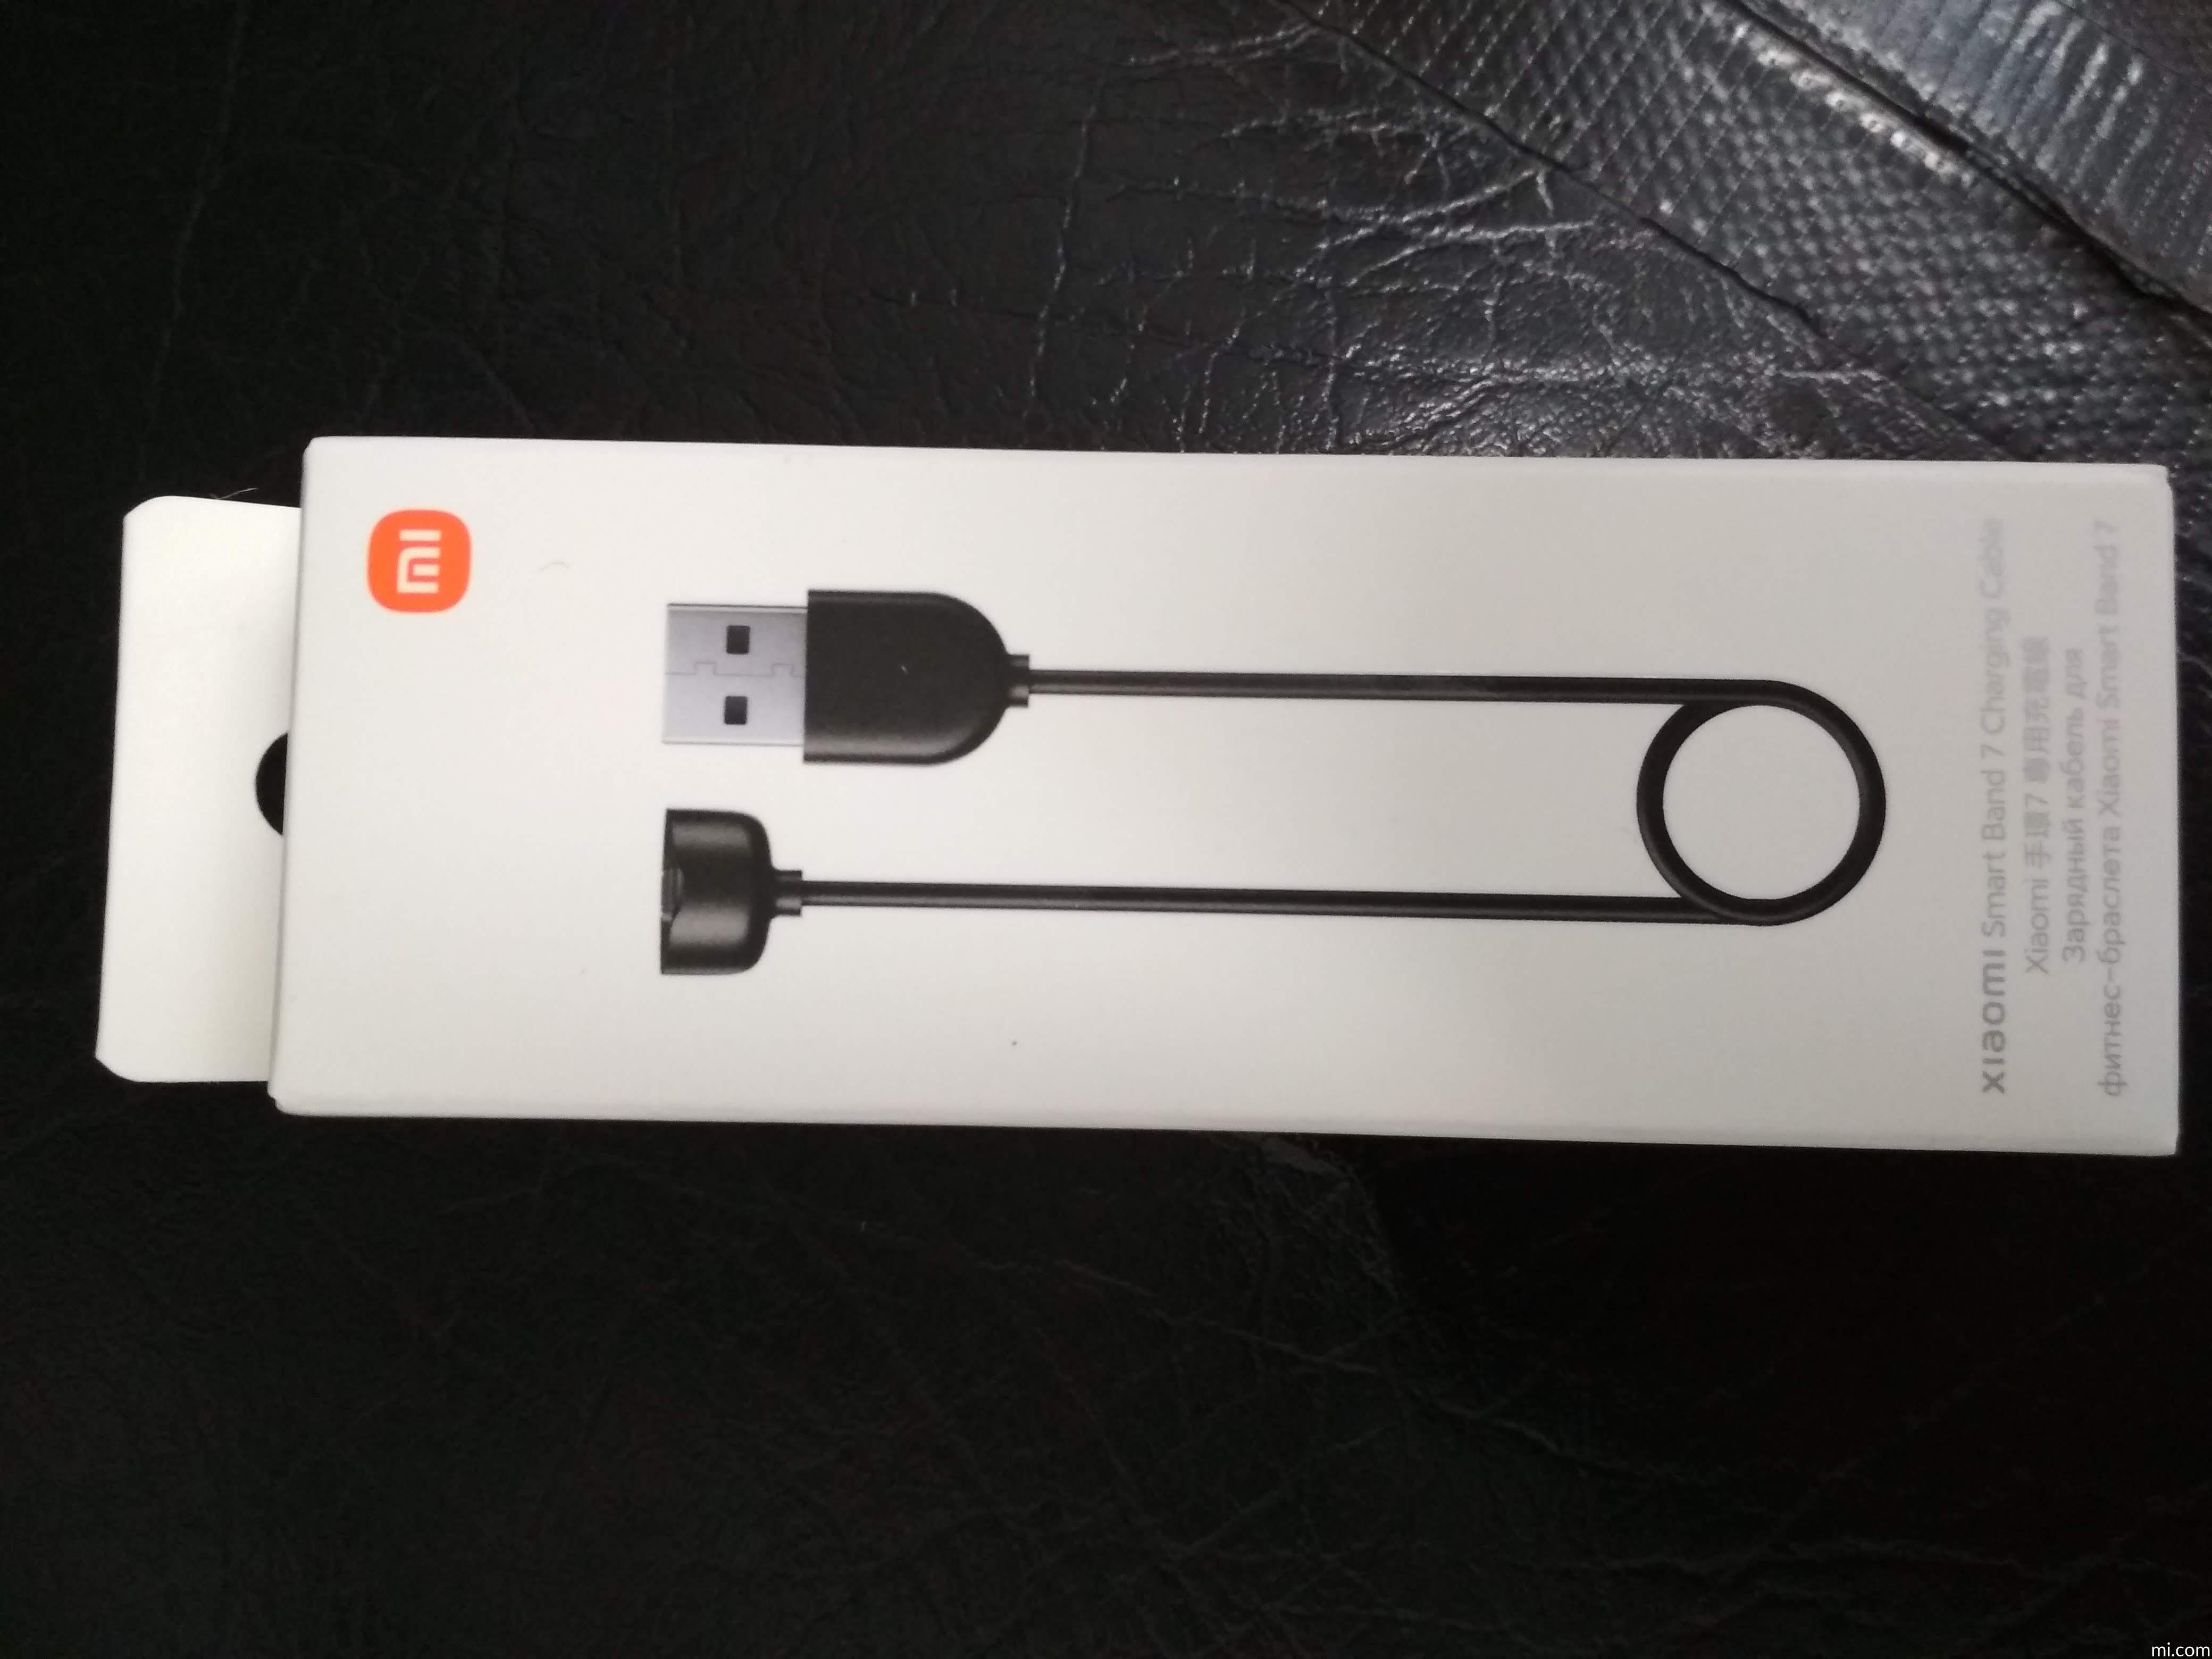 Cargador para Xiaomi Smart Band 7 Charging Cable